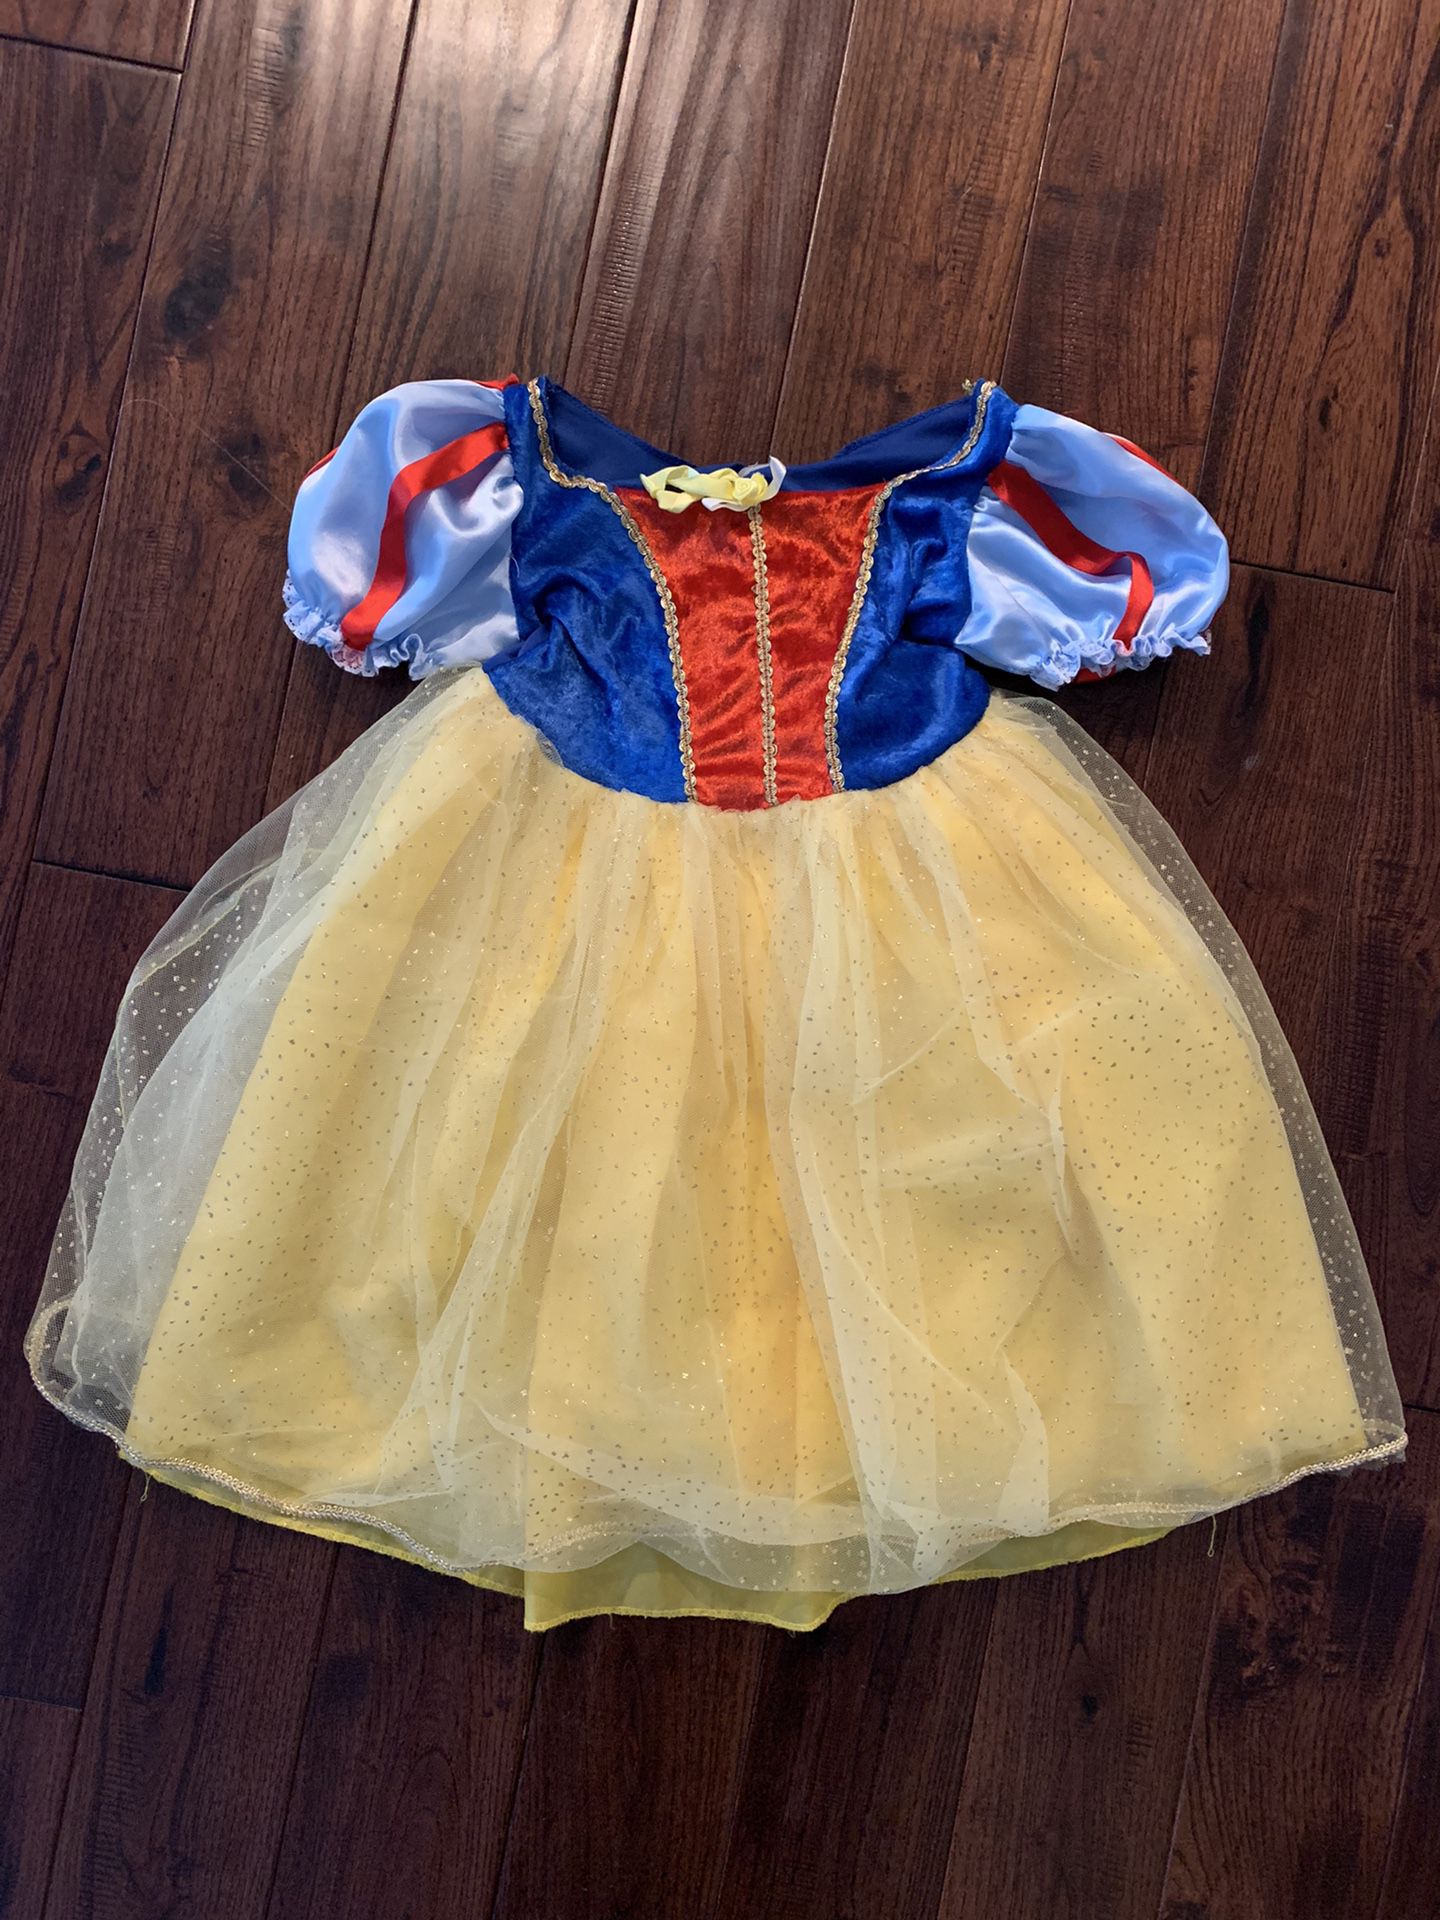 Snow White Toddler Costume